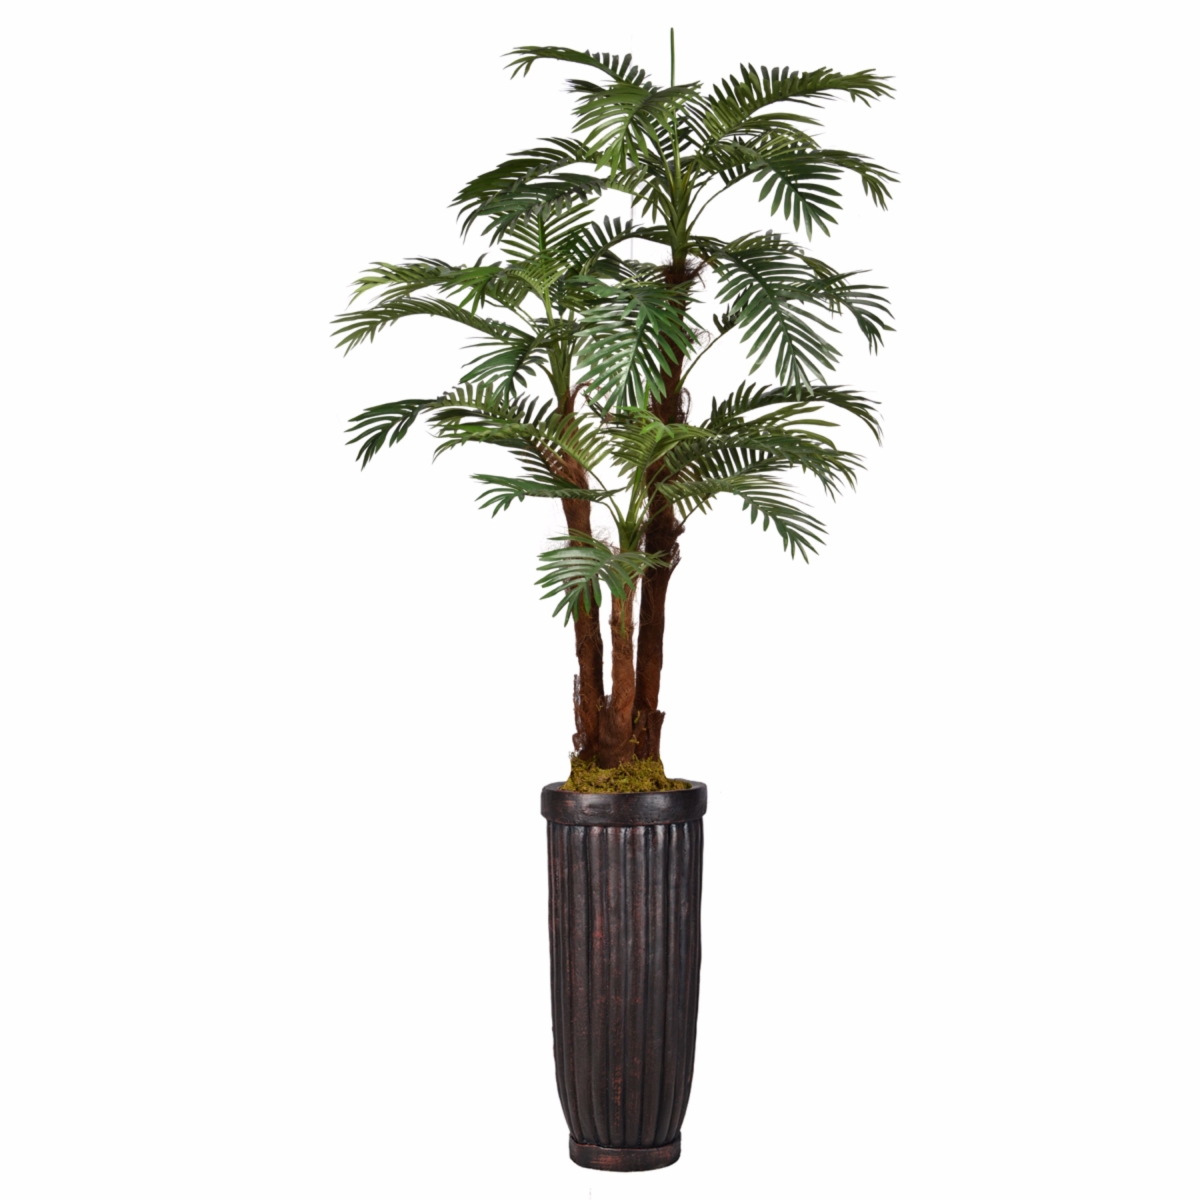 Vhx135214 87 In. Tall Palm Tree With Burlap Kit & Fiberstone Planter